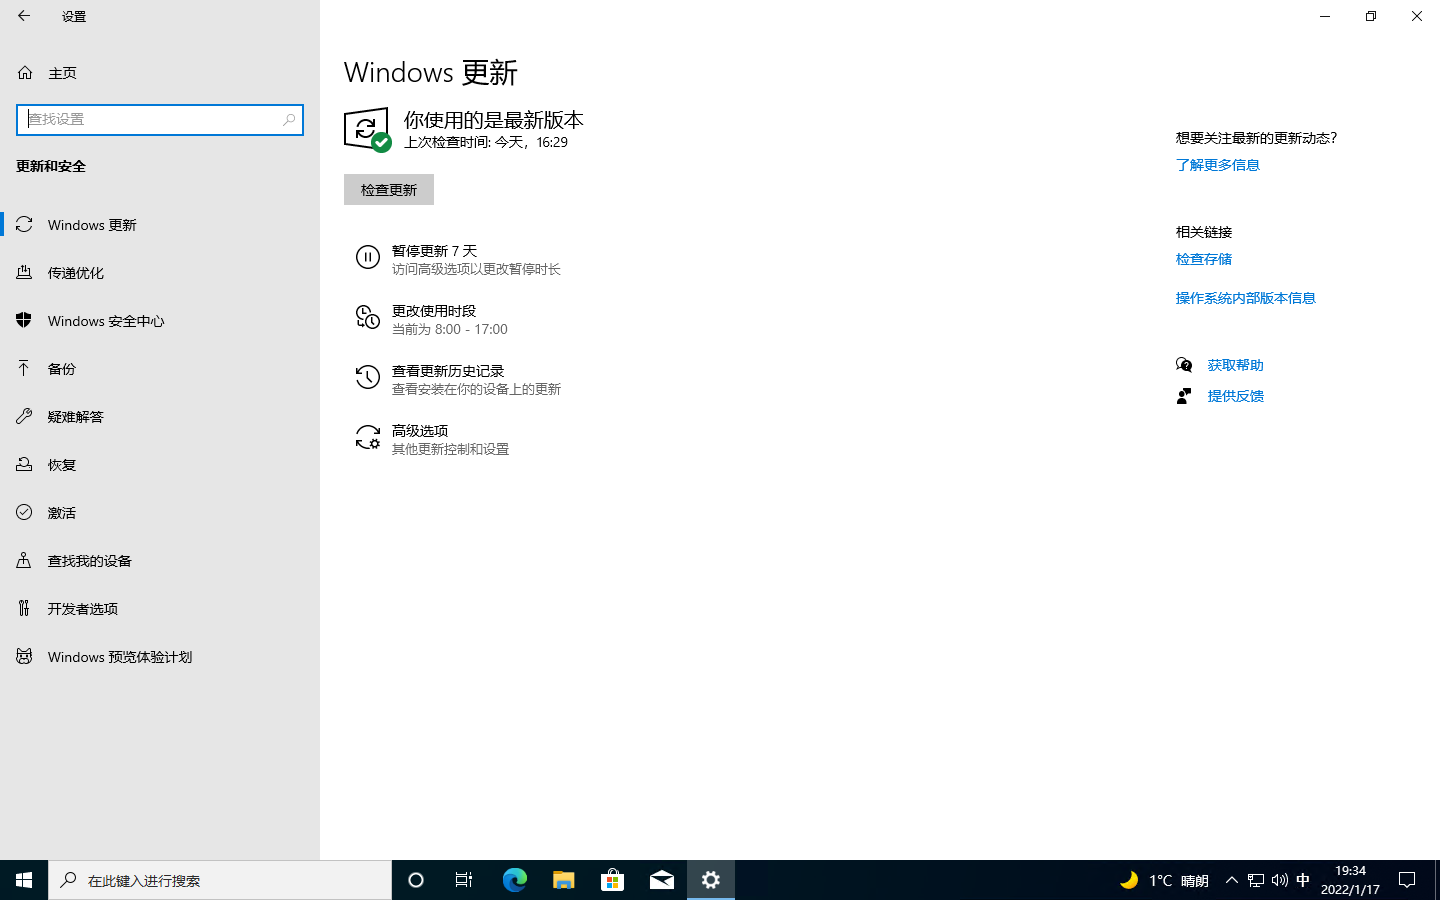 操作系统, 操作系统, Windows10, WindowsServer, win10, win7, win8